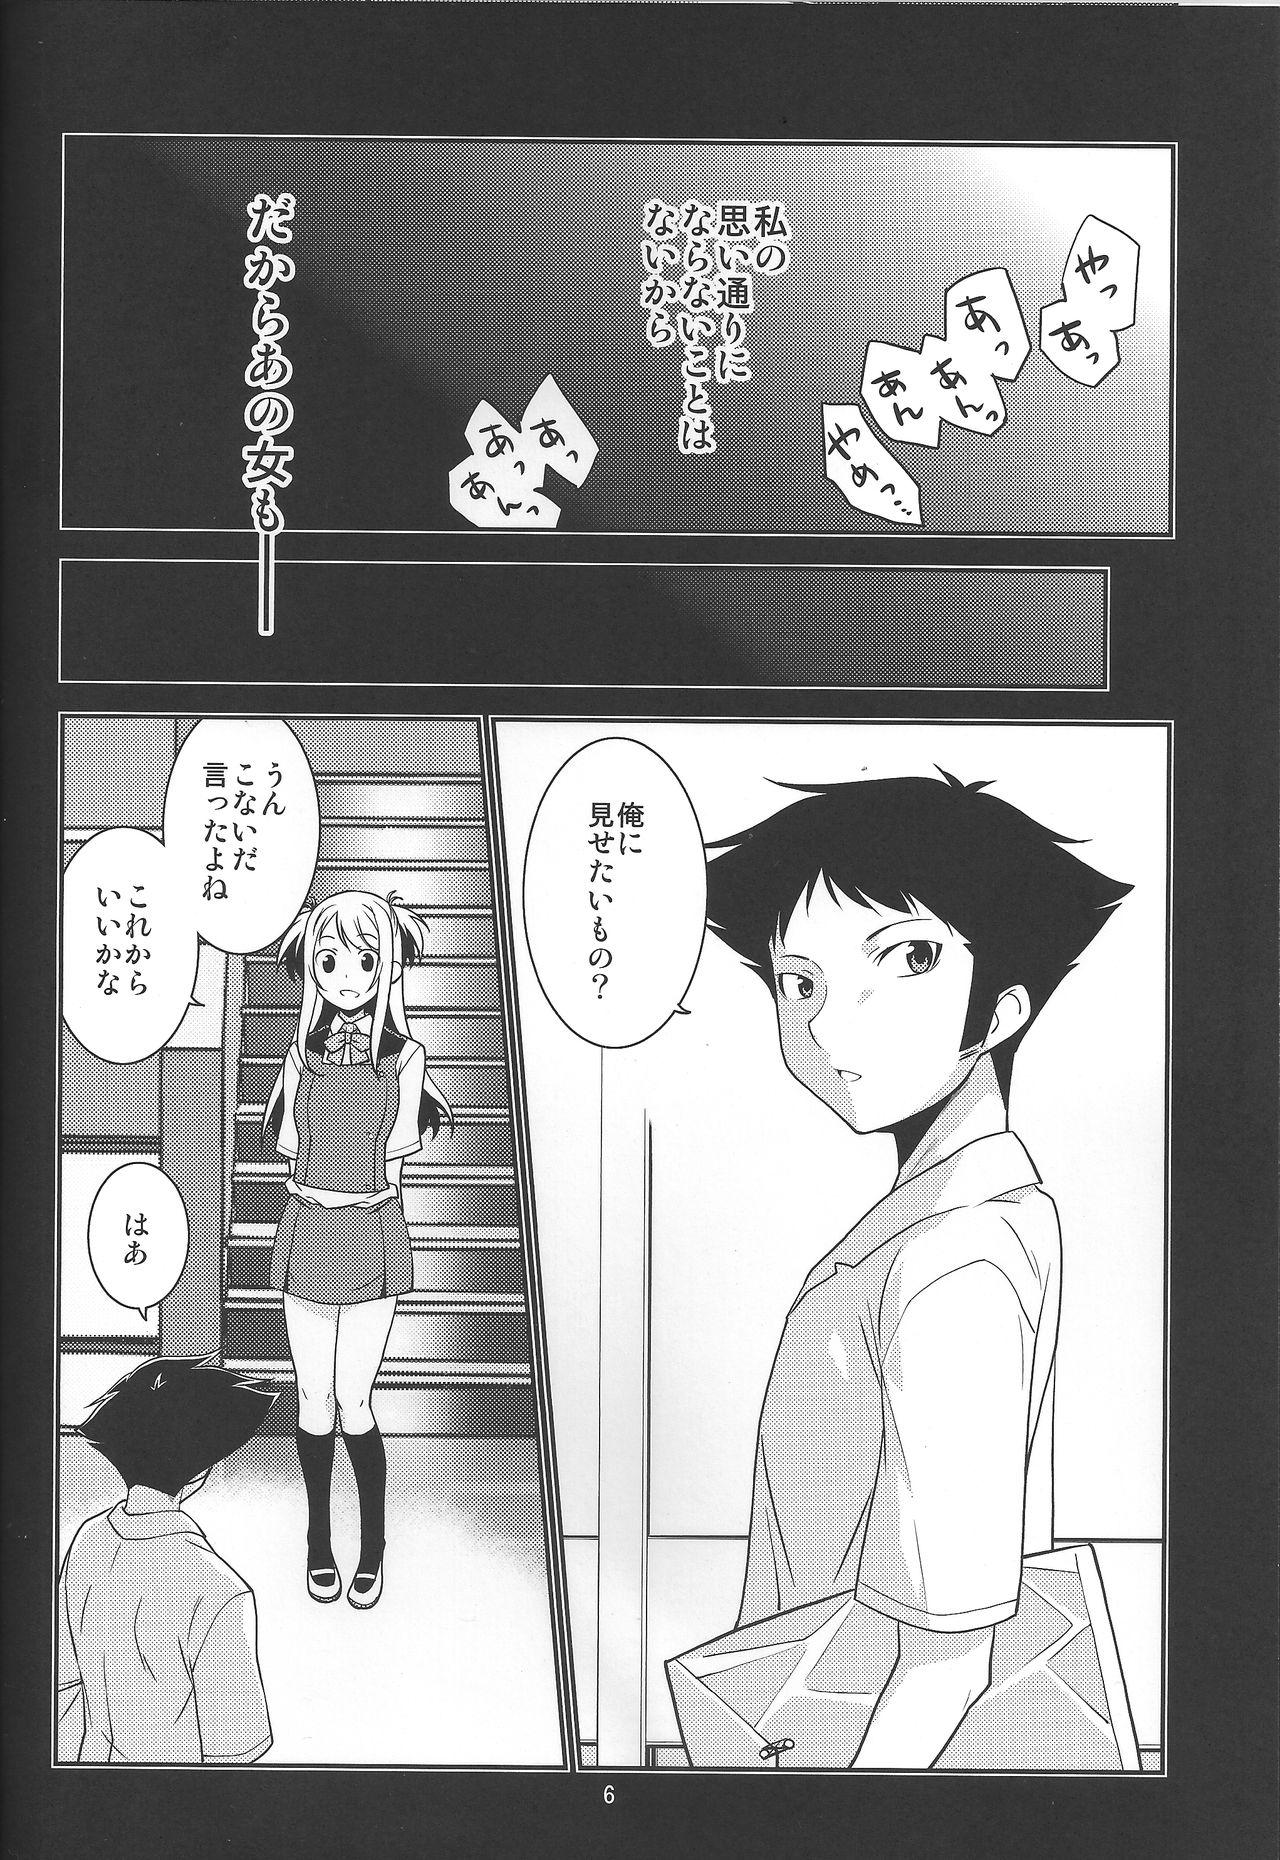 Penis Sucking Seitokaichou Kagura no Sugao + Omake Culonas - Page 6